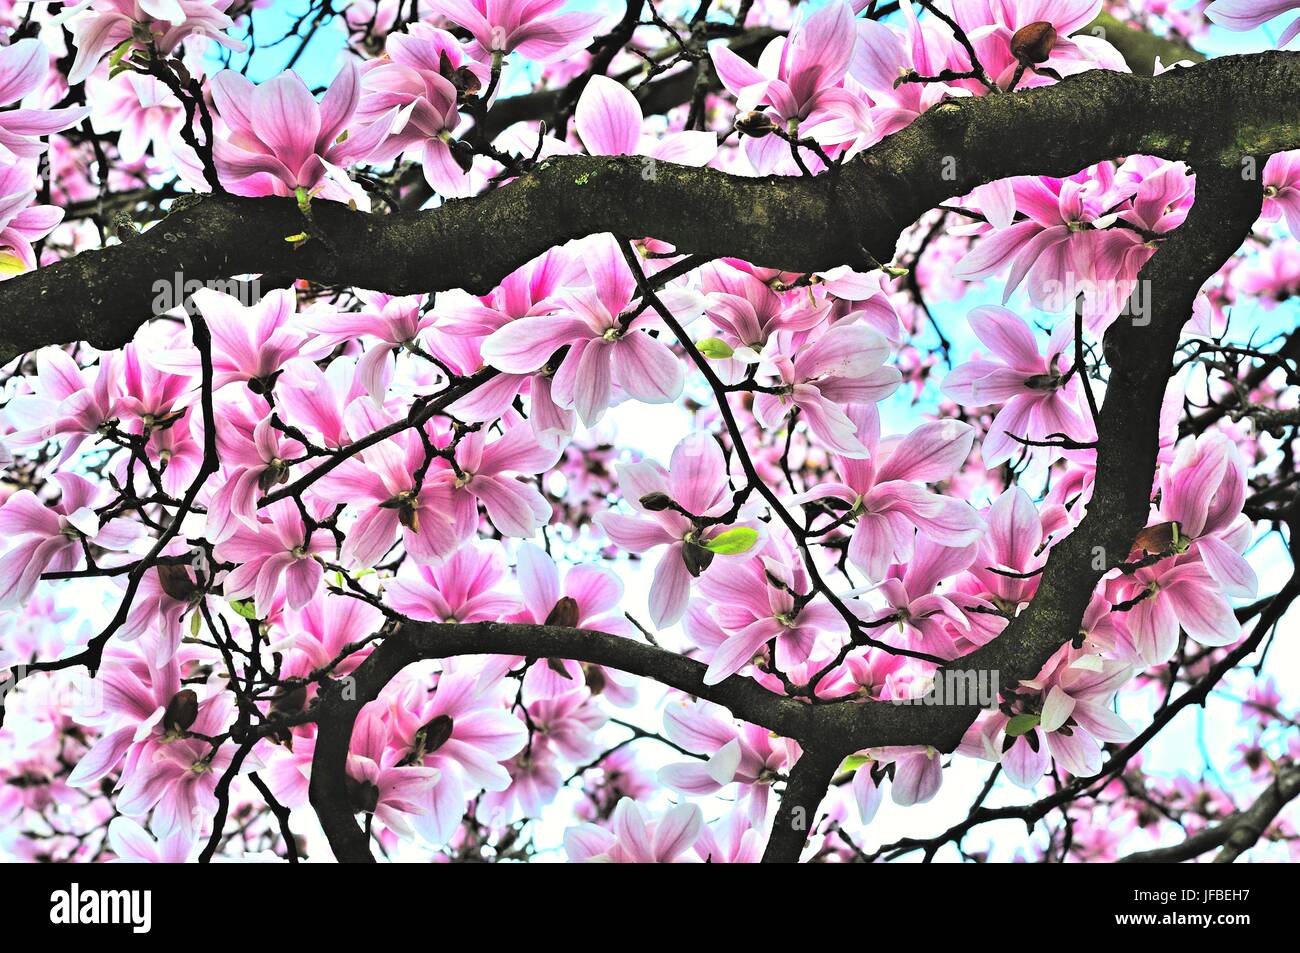 Under the magnolia tree Stock Photo